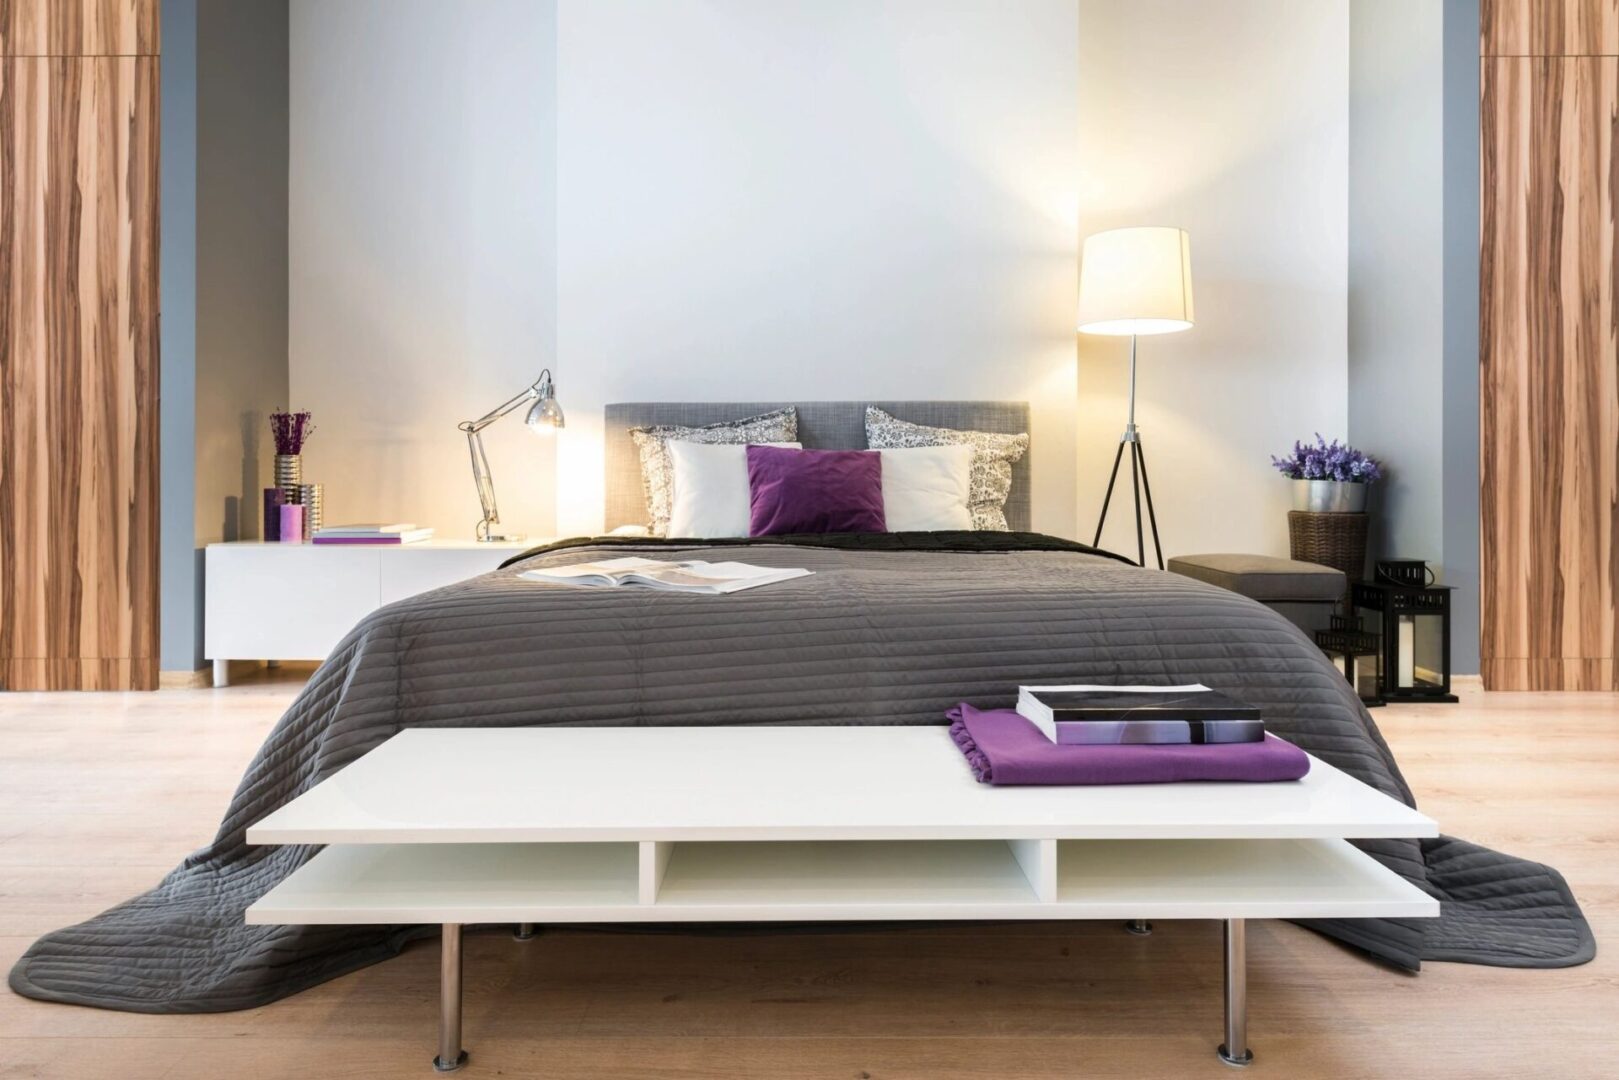 Bedroom with purple